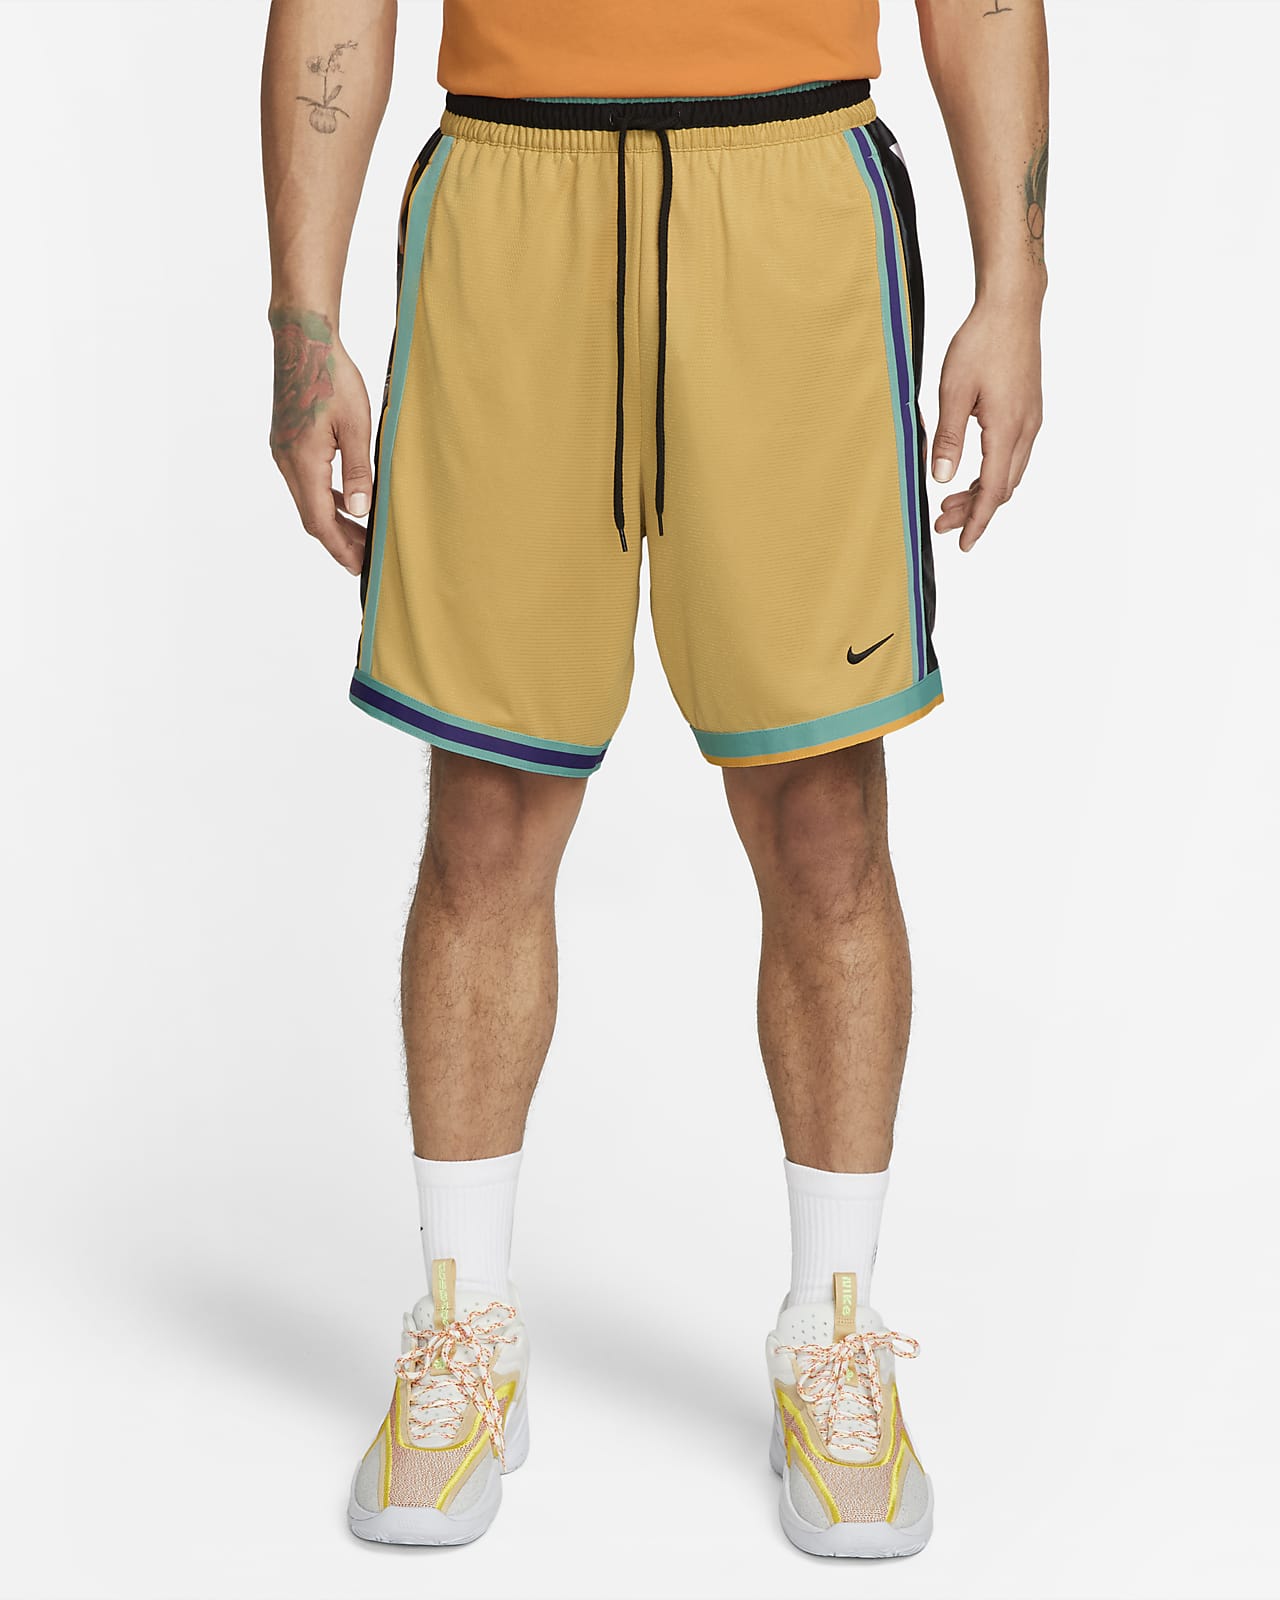 Nike Dri-FIT DNA Men's 8 Basketball Shorts